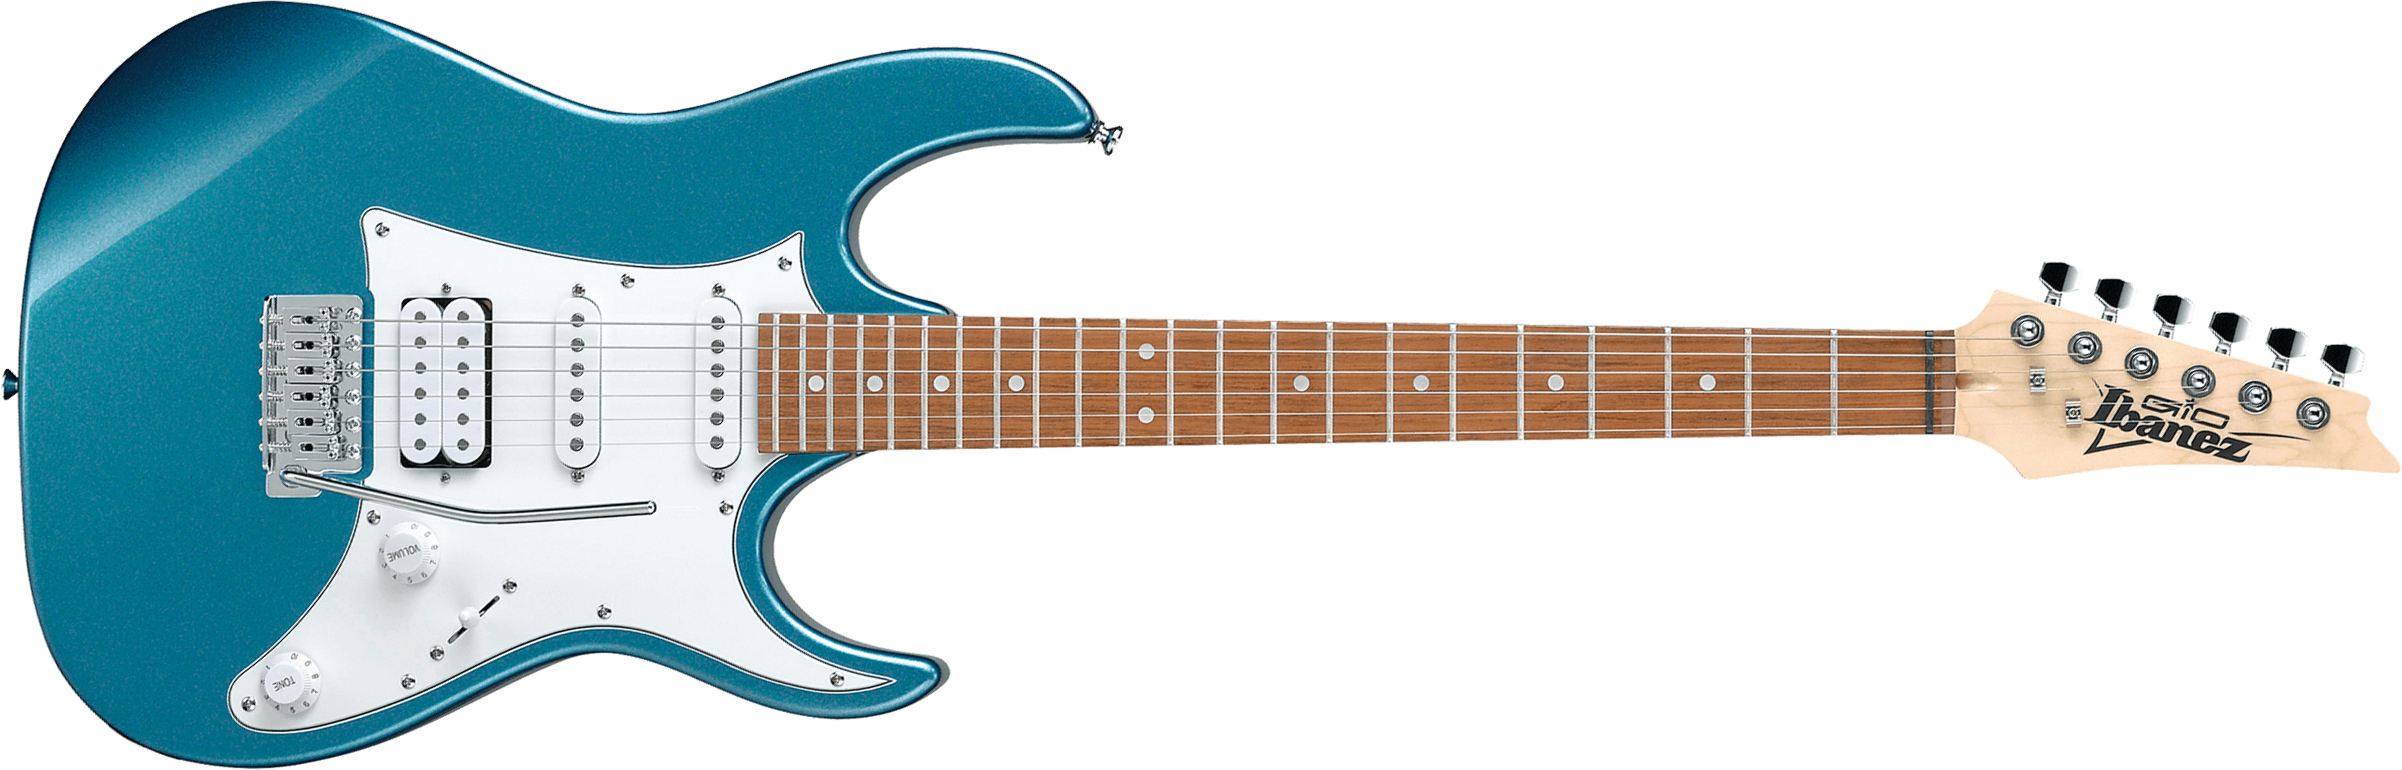 Ibanez Grx40 Mlb Gio Hss Trem Jat - Metallic Light Blue - E-Gitarre in Str-Form - Main picture